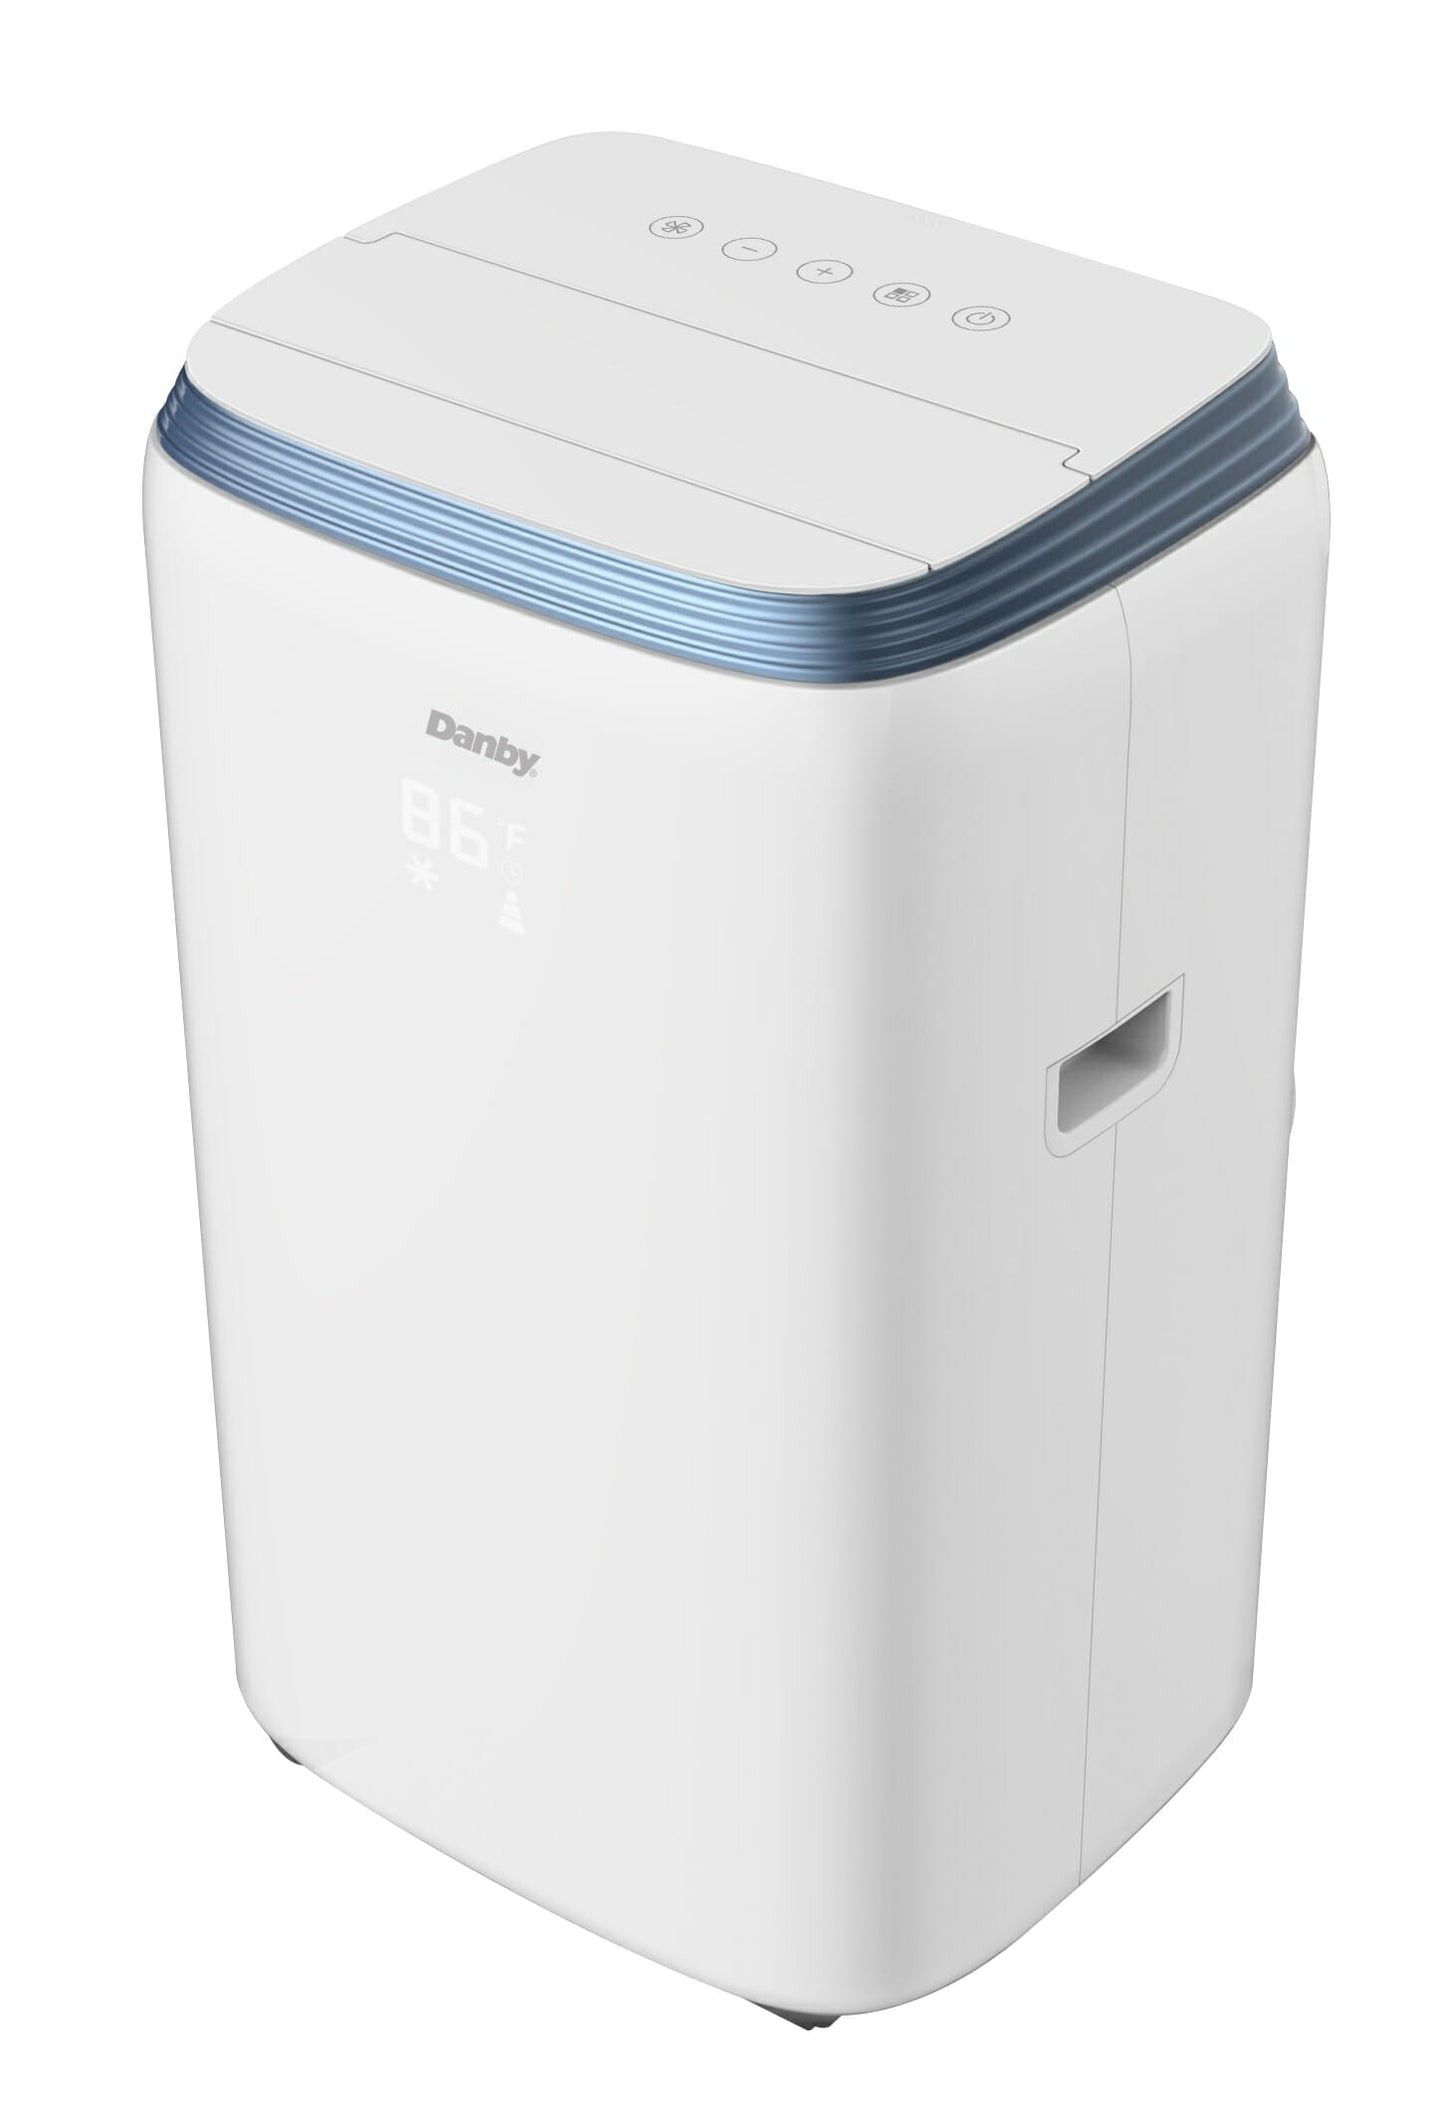 Danby 13,000 BTU Portable AC, 3-in-1 design- Air conditioner, dehumidifier and fan - DPA080E3WDB-6 (scratch and dent)